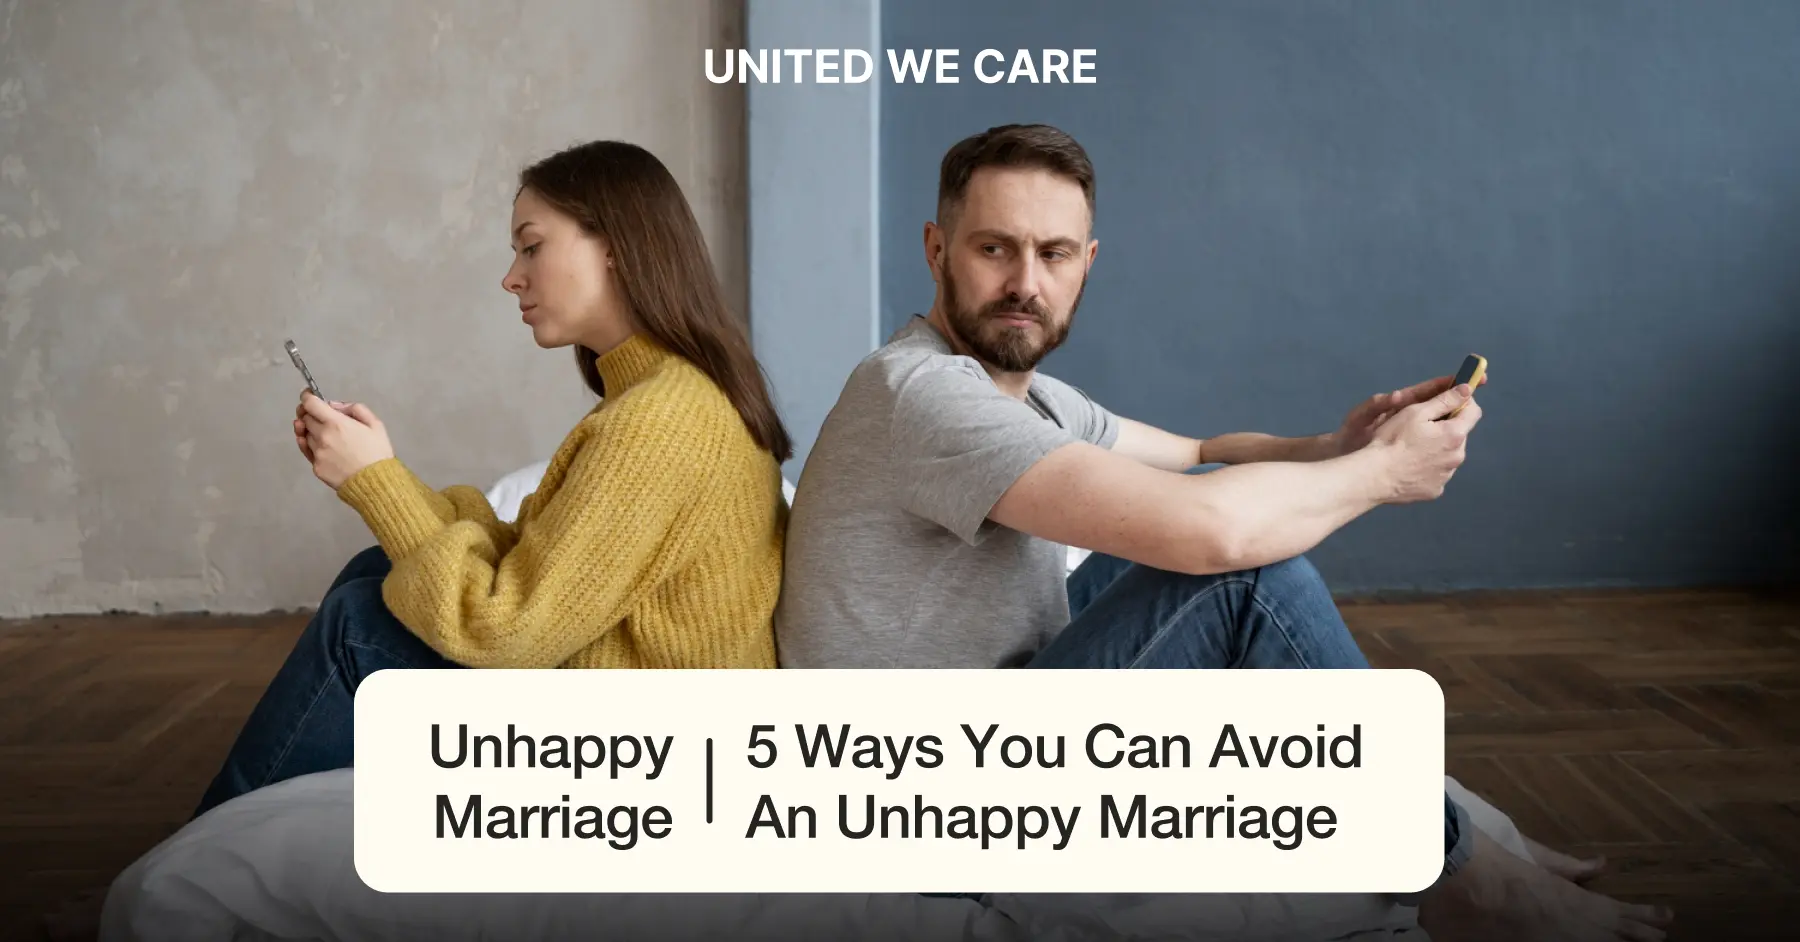 Unhappy Marriage: 5 Ways You Can Avoid An Unhappy Marriage